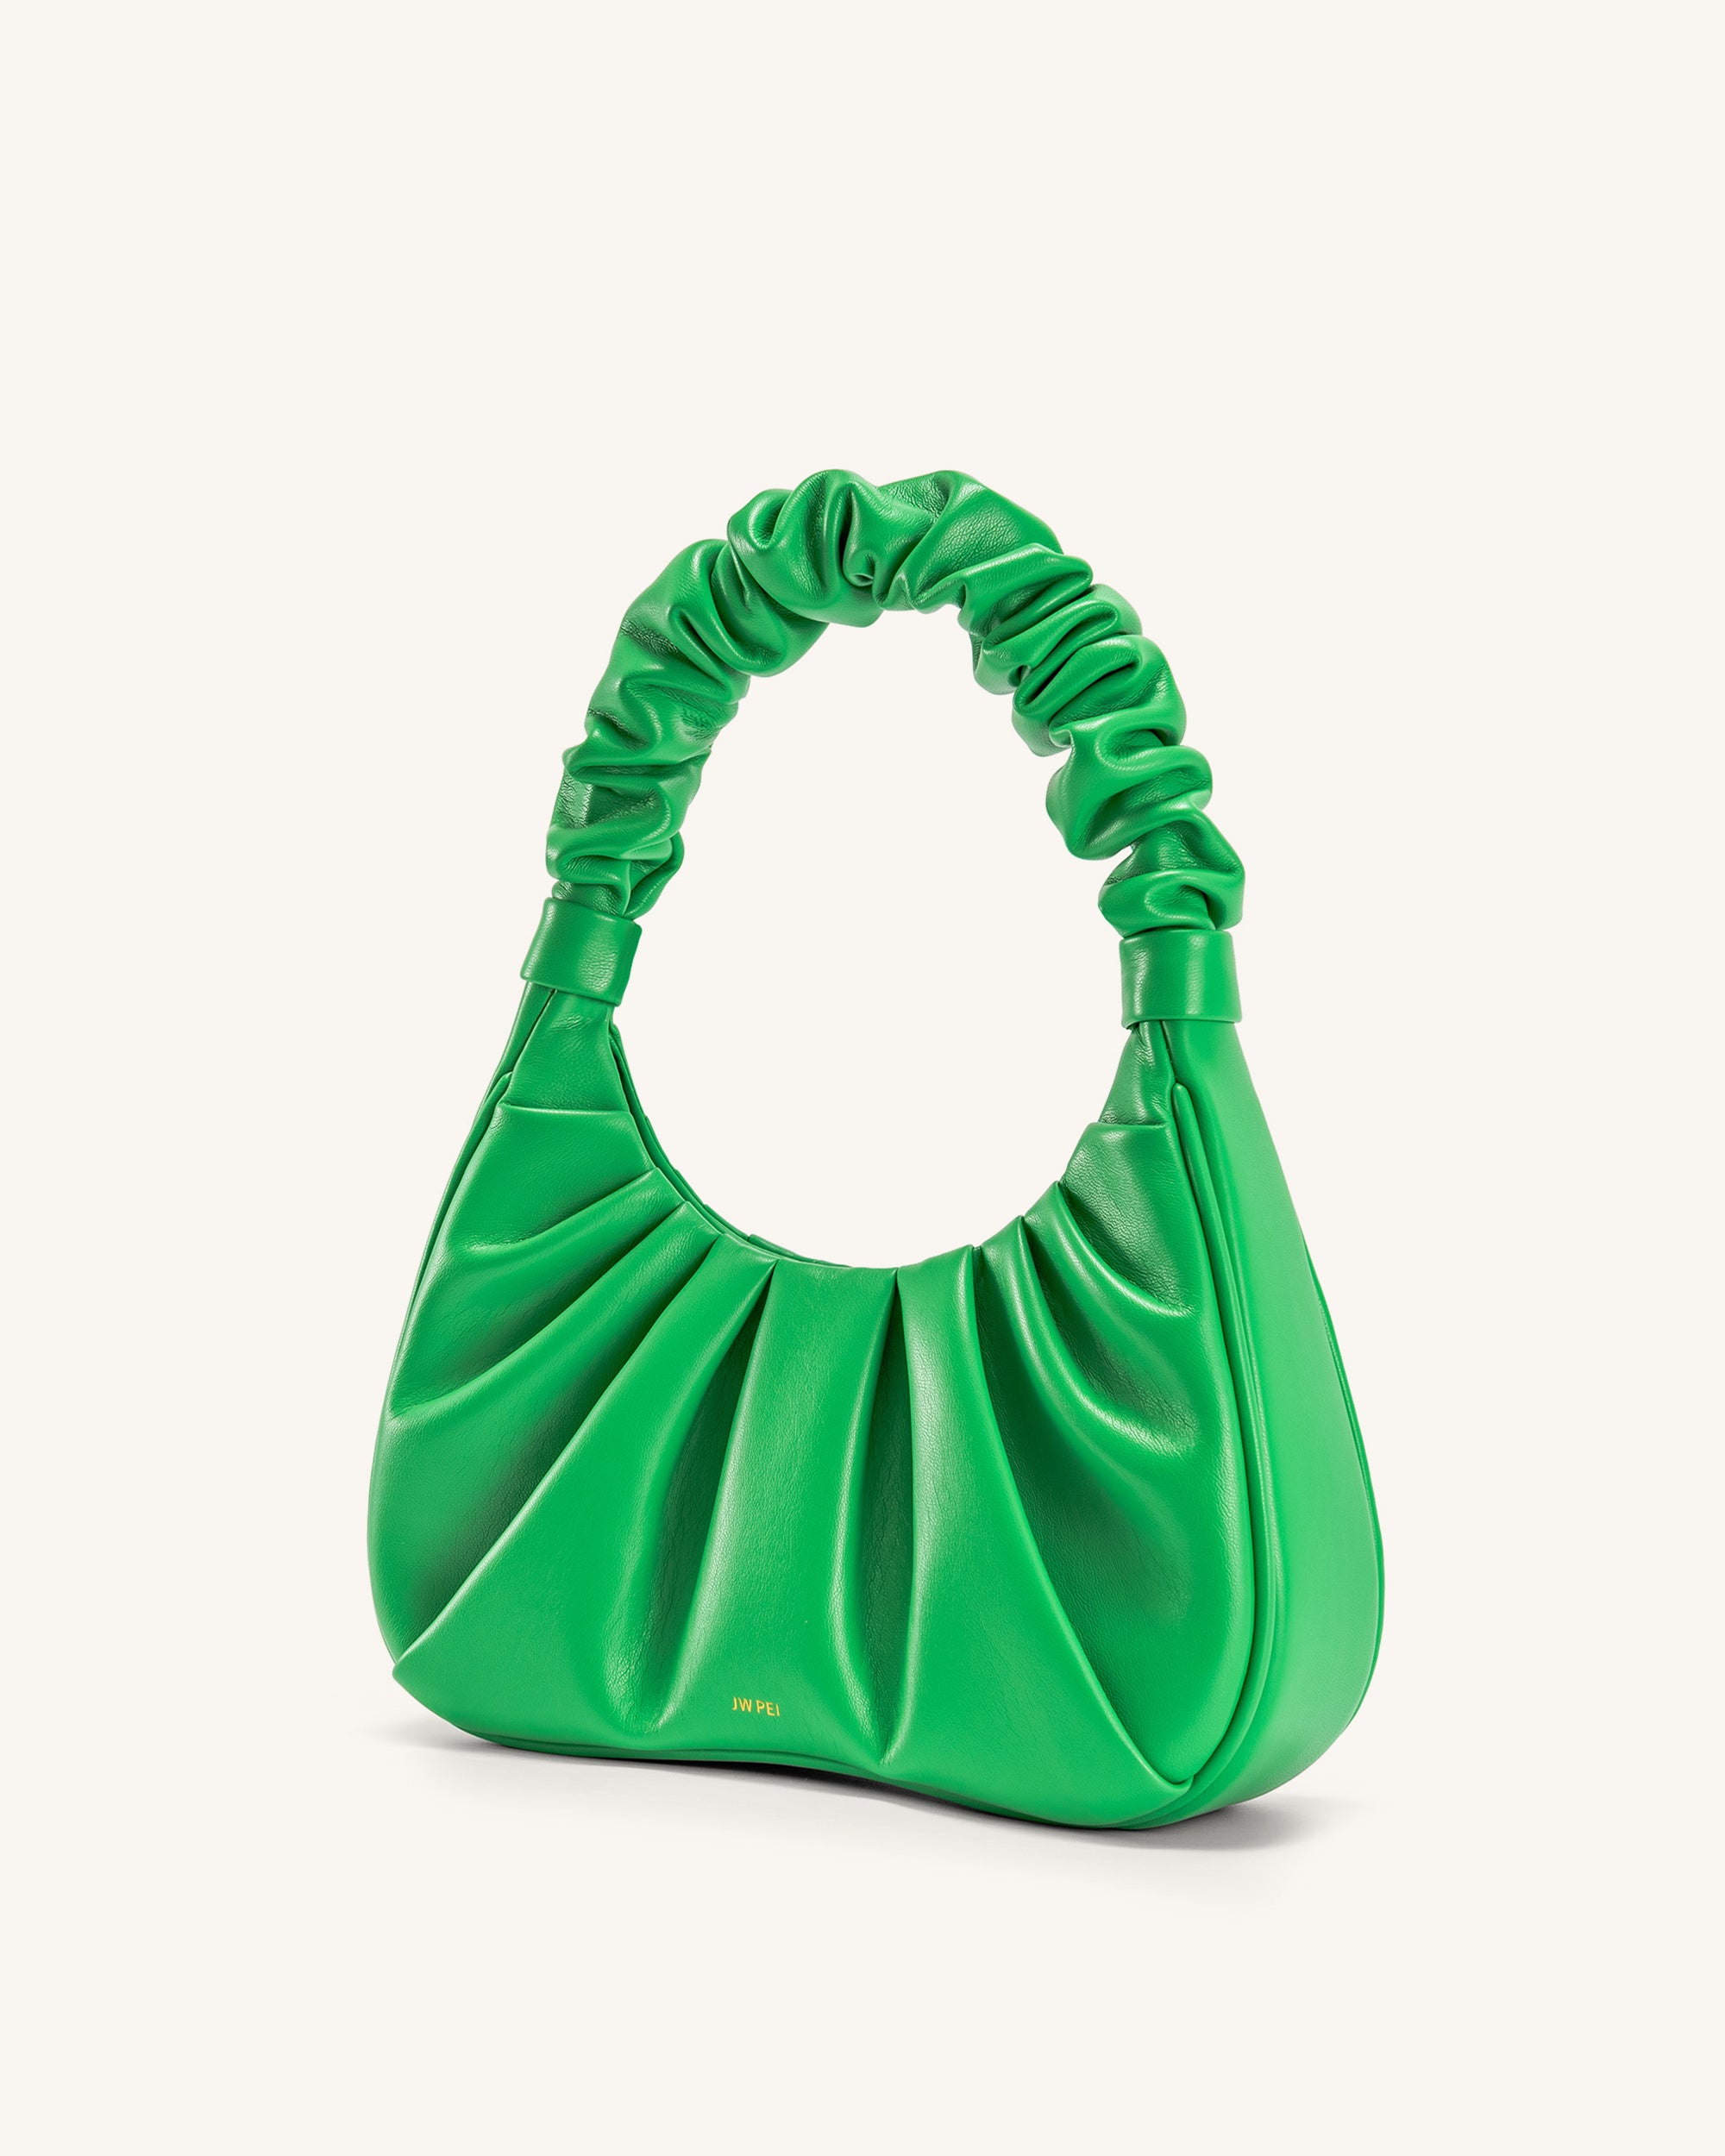 Buy Lime Green Glitter Vinyl Purse Bowling Bag Green Zipper Pocket Sparkle  Online in India - Etsy